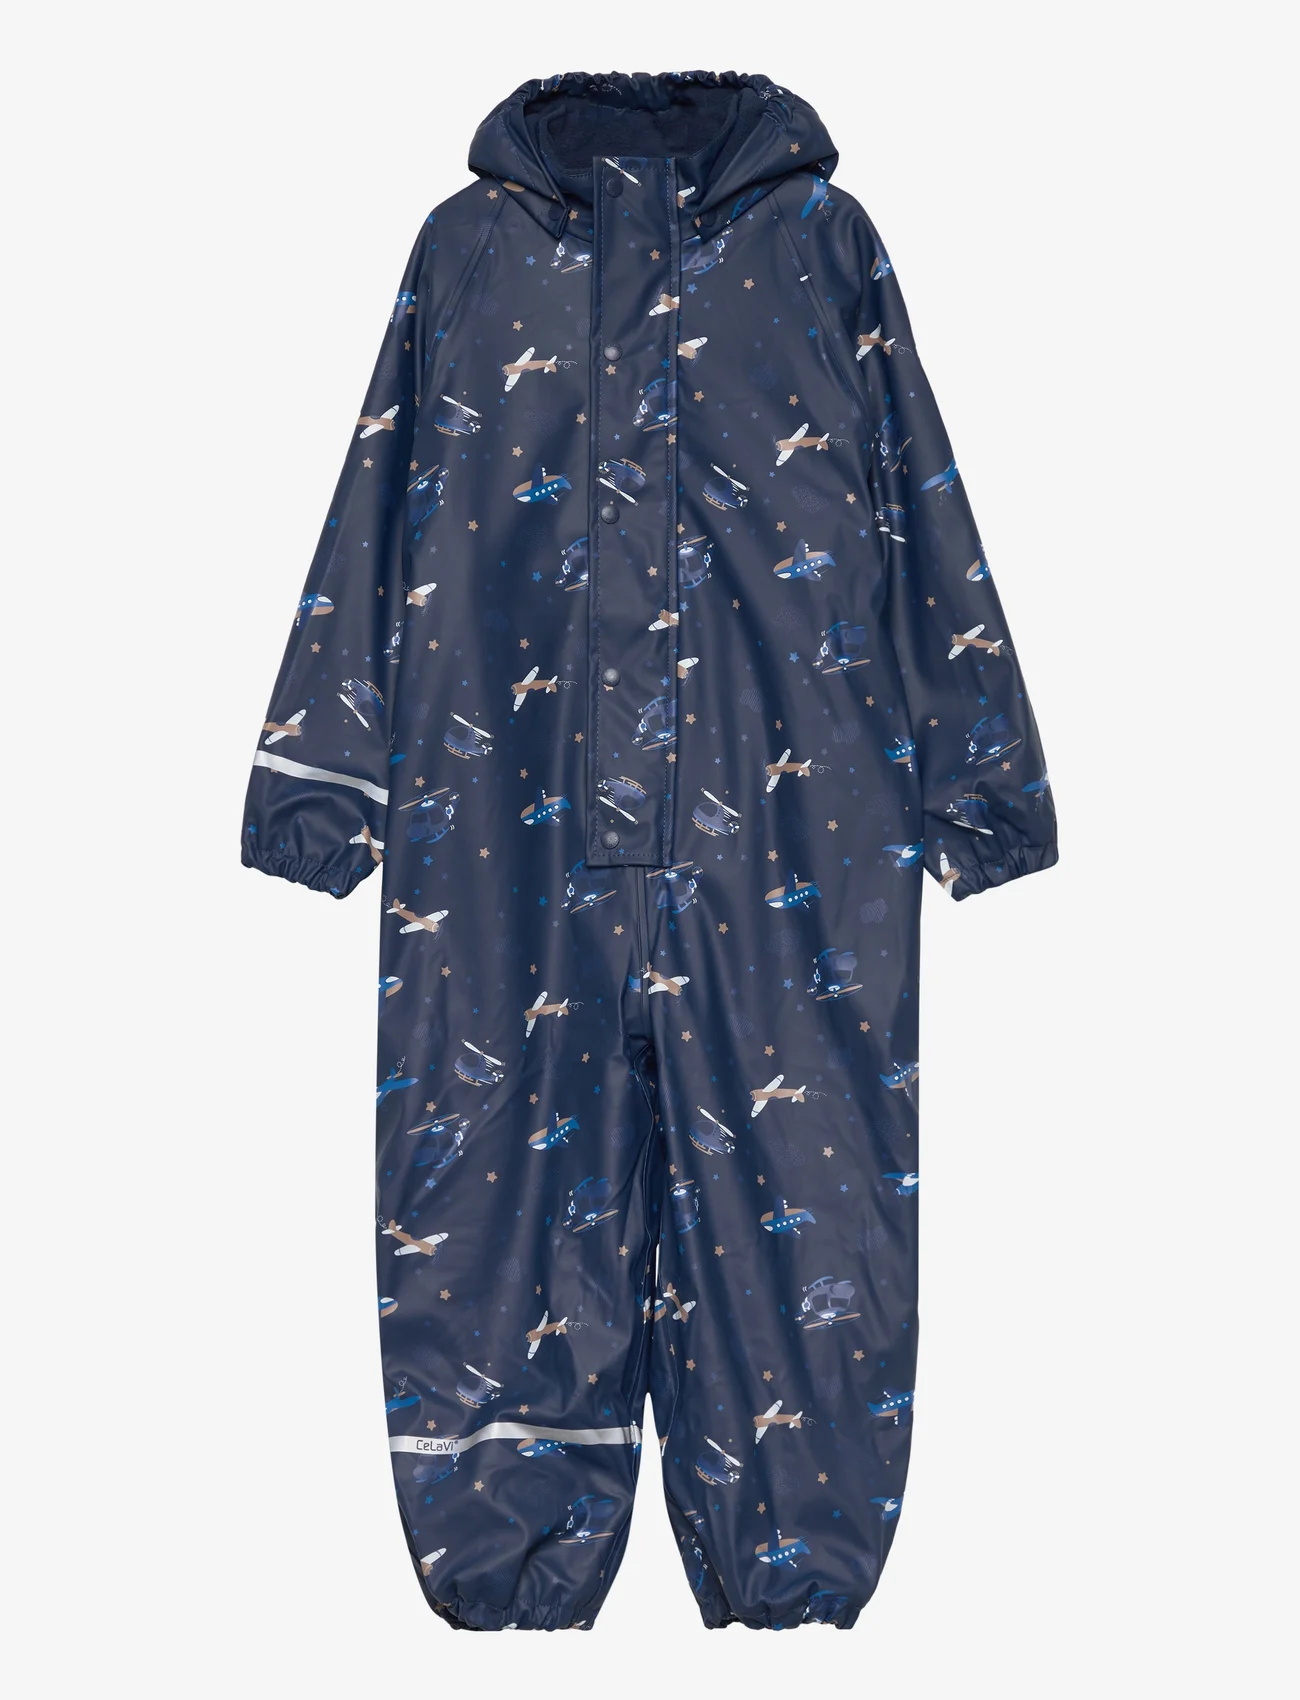 CeLaVi - Rainwear Suit -AOP, w.fleece - kombinezonai nuo lietaus - pageant blue - 0